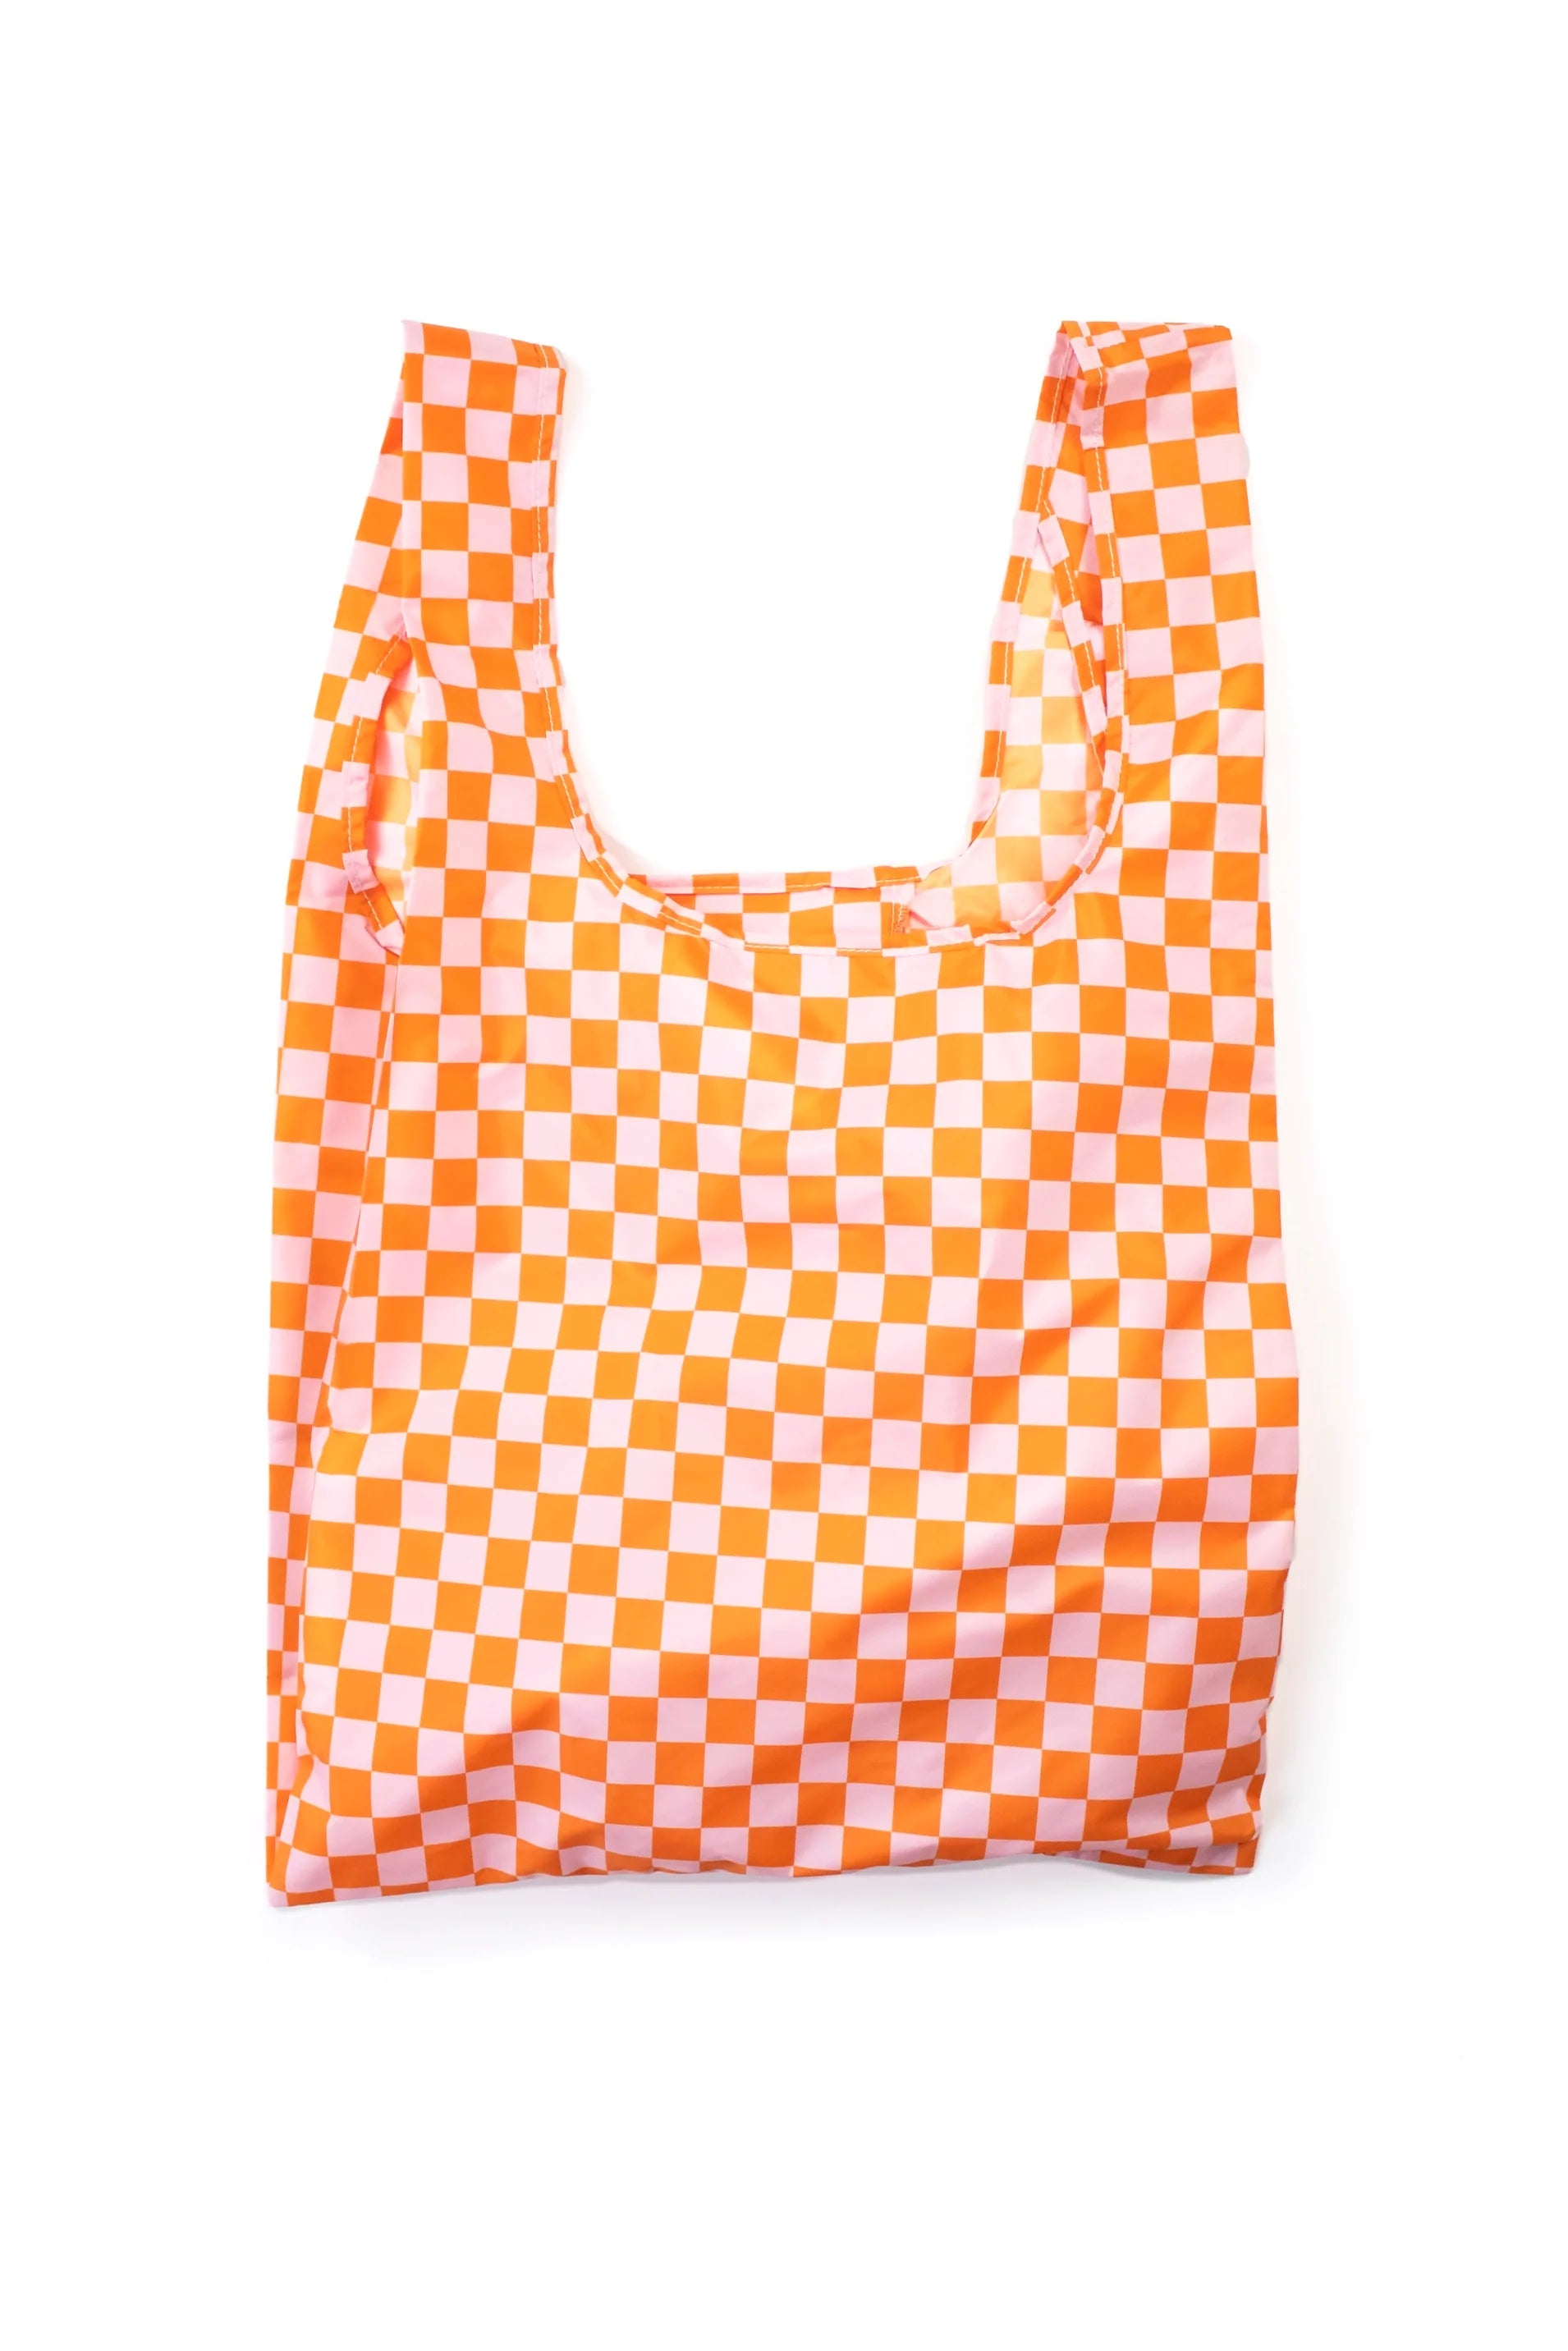 Checkerboard Pink & Orange Medium Kind Bag